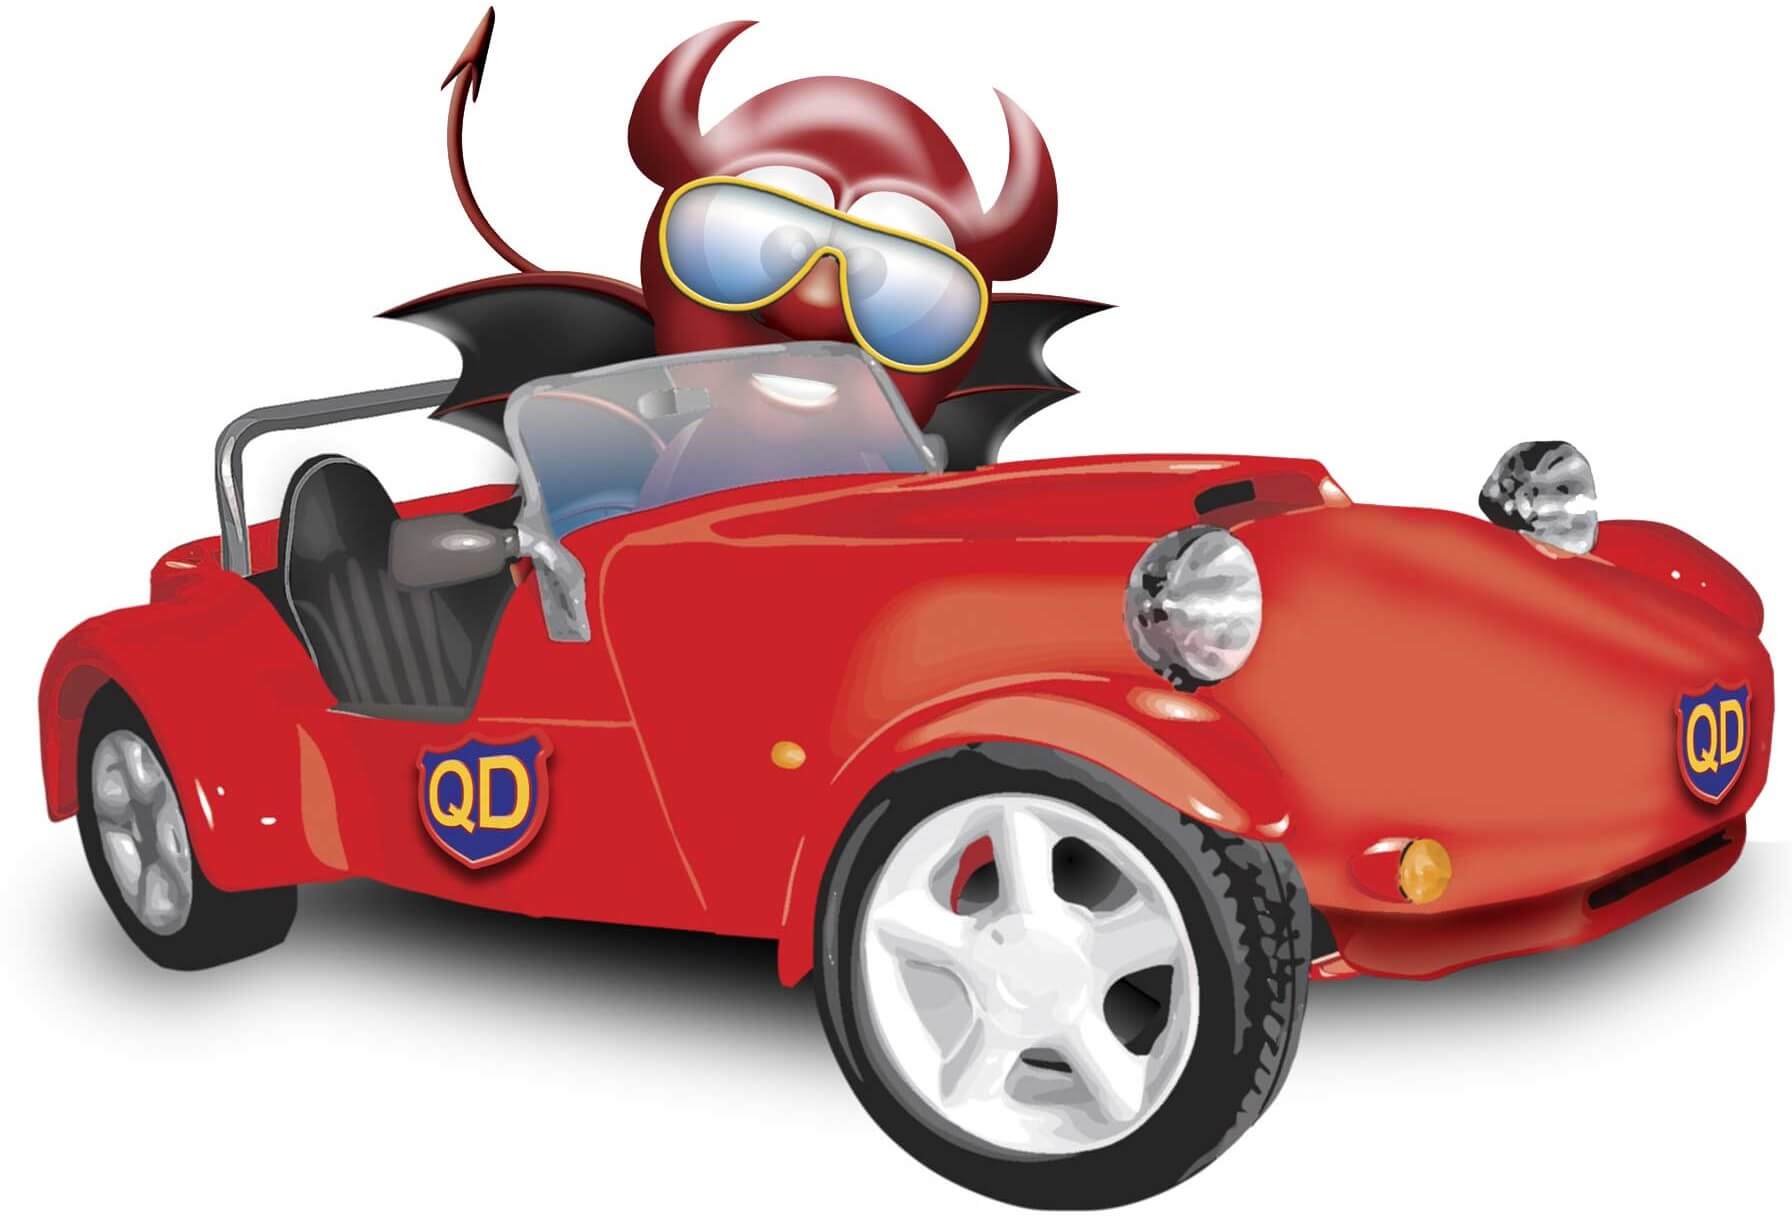 Quote Devil mascot in a car